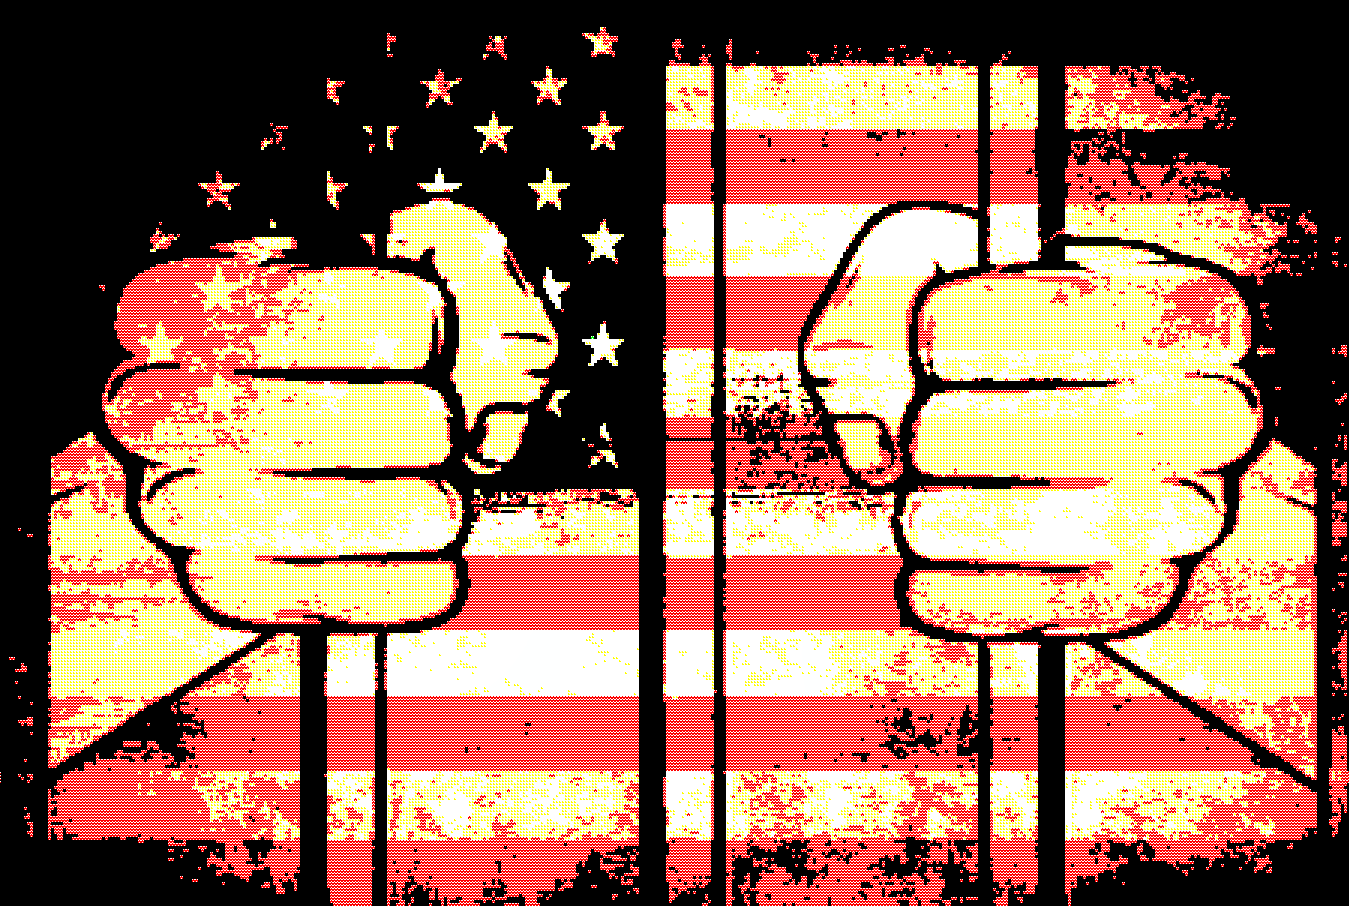 Jailcore database leaks PII of inmates & correctional officers across US